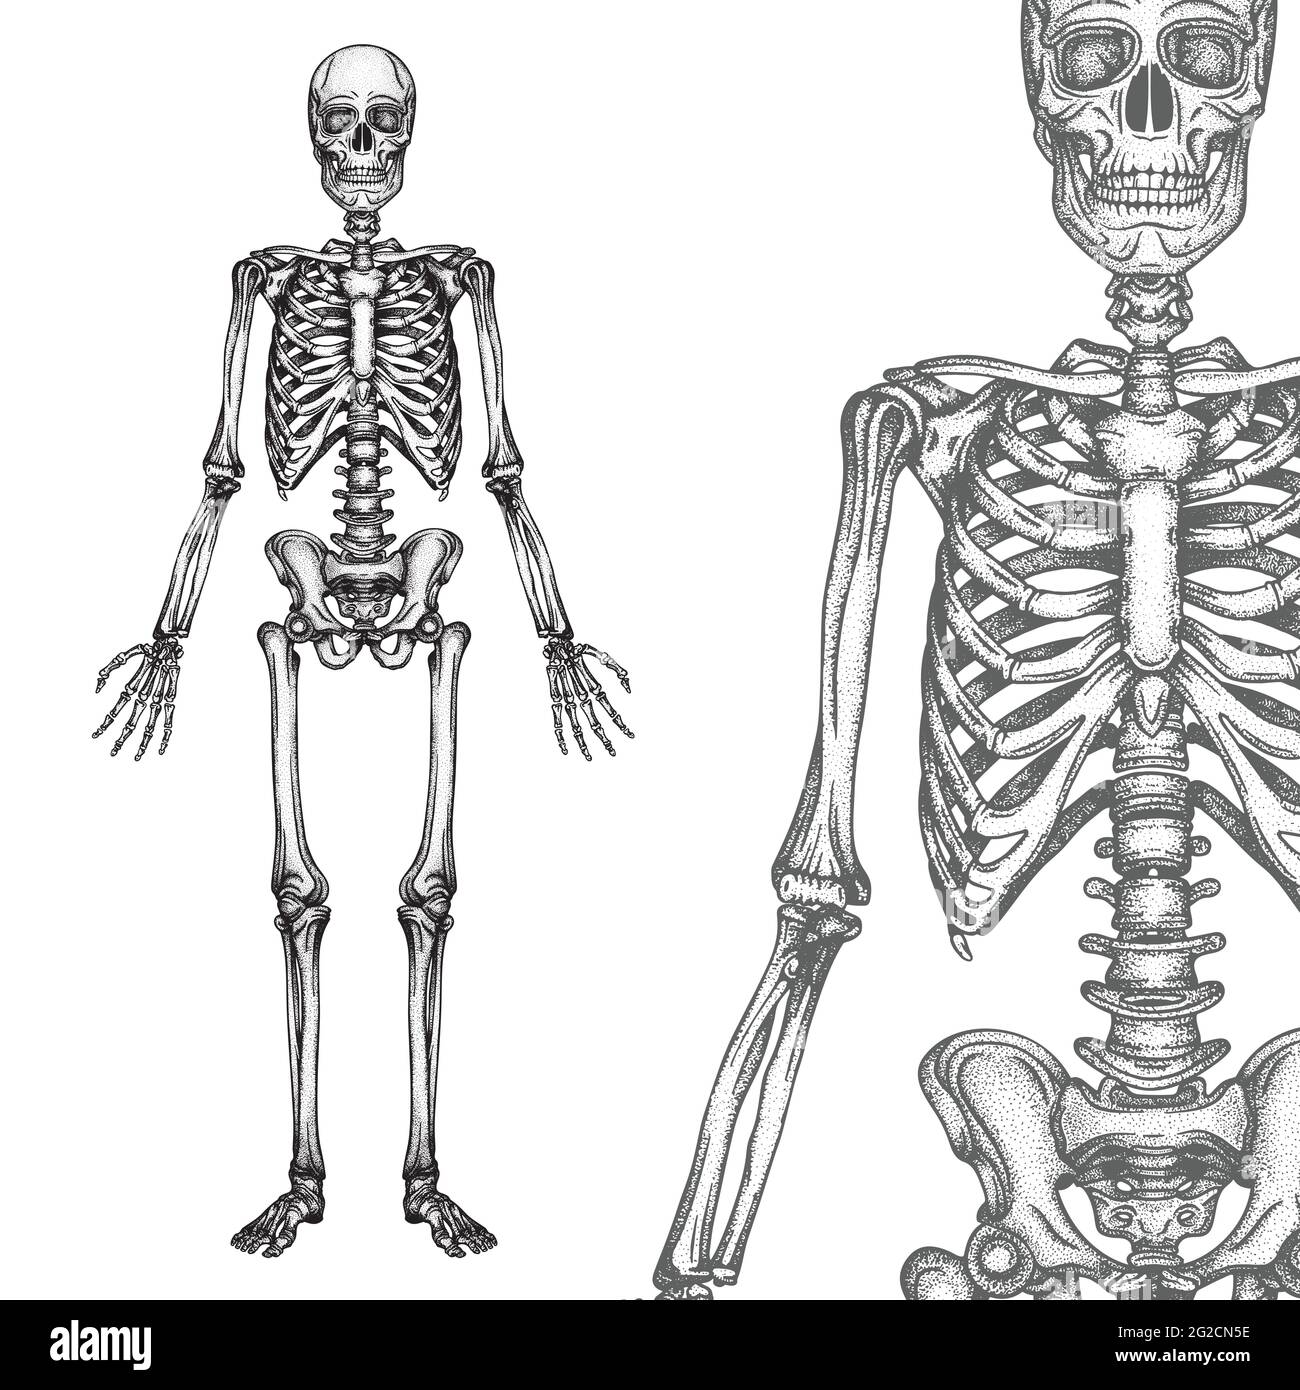 Human skeleton hand drawn vector illustrations set. Part of human skeleton graphic. Stock Vector